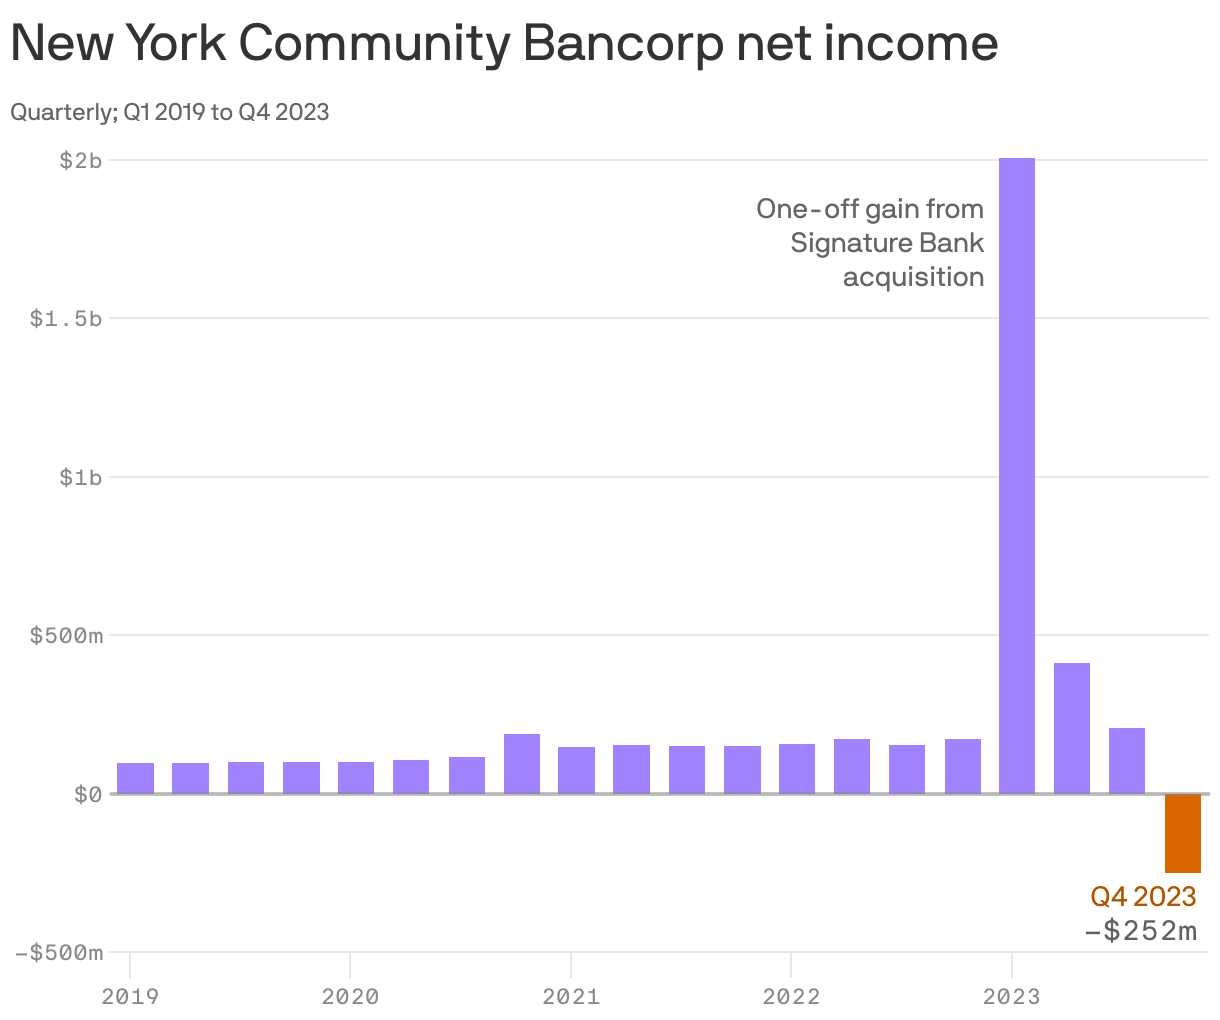 New York Community Bancorp net income